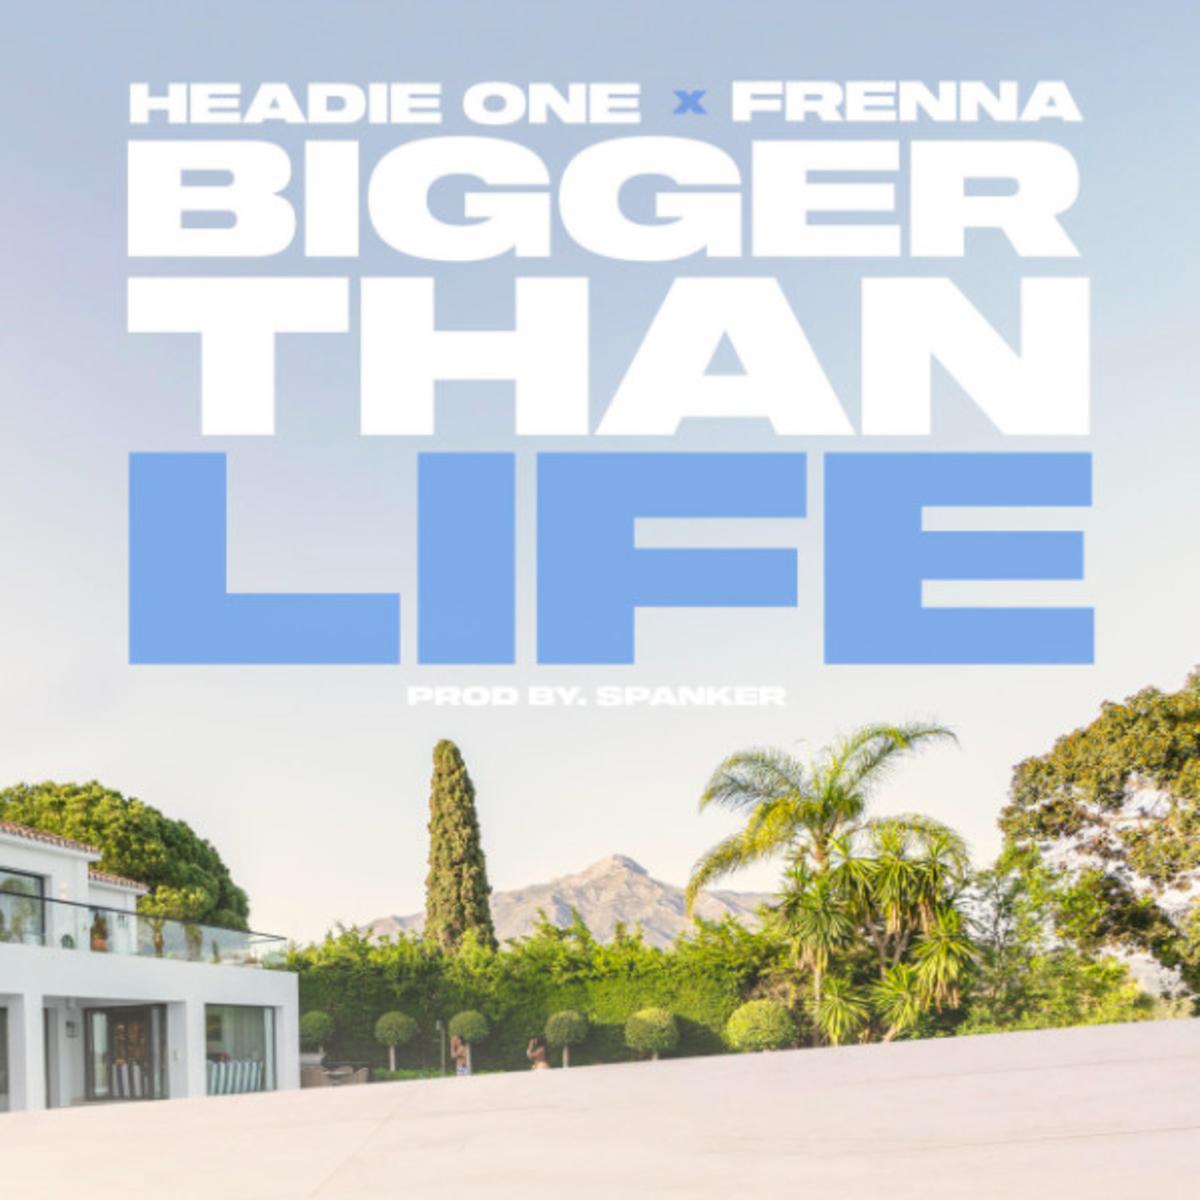 Headie One Feat. Frenna Bigger Than Life